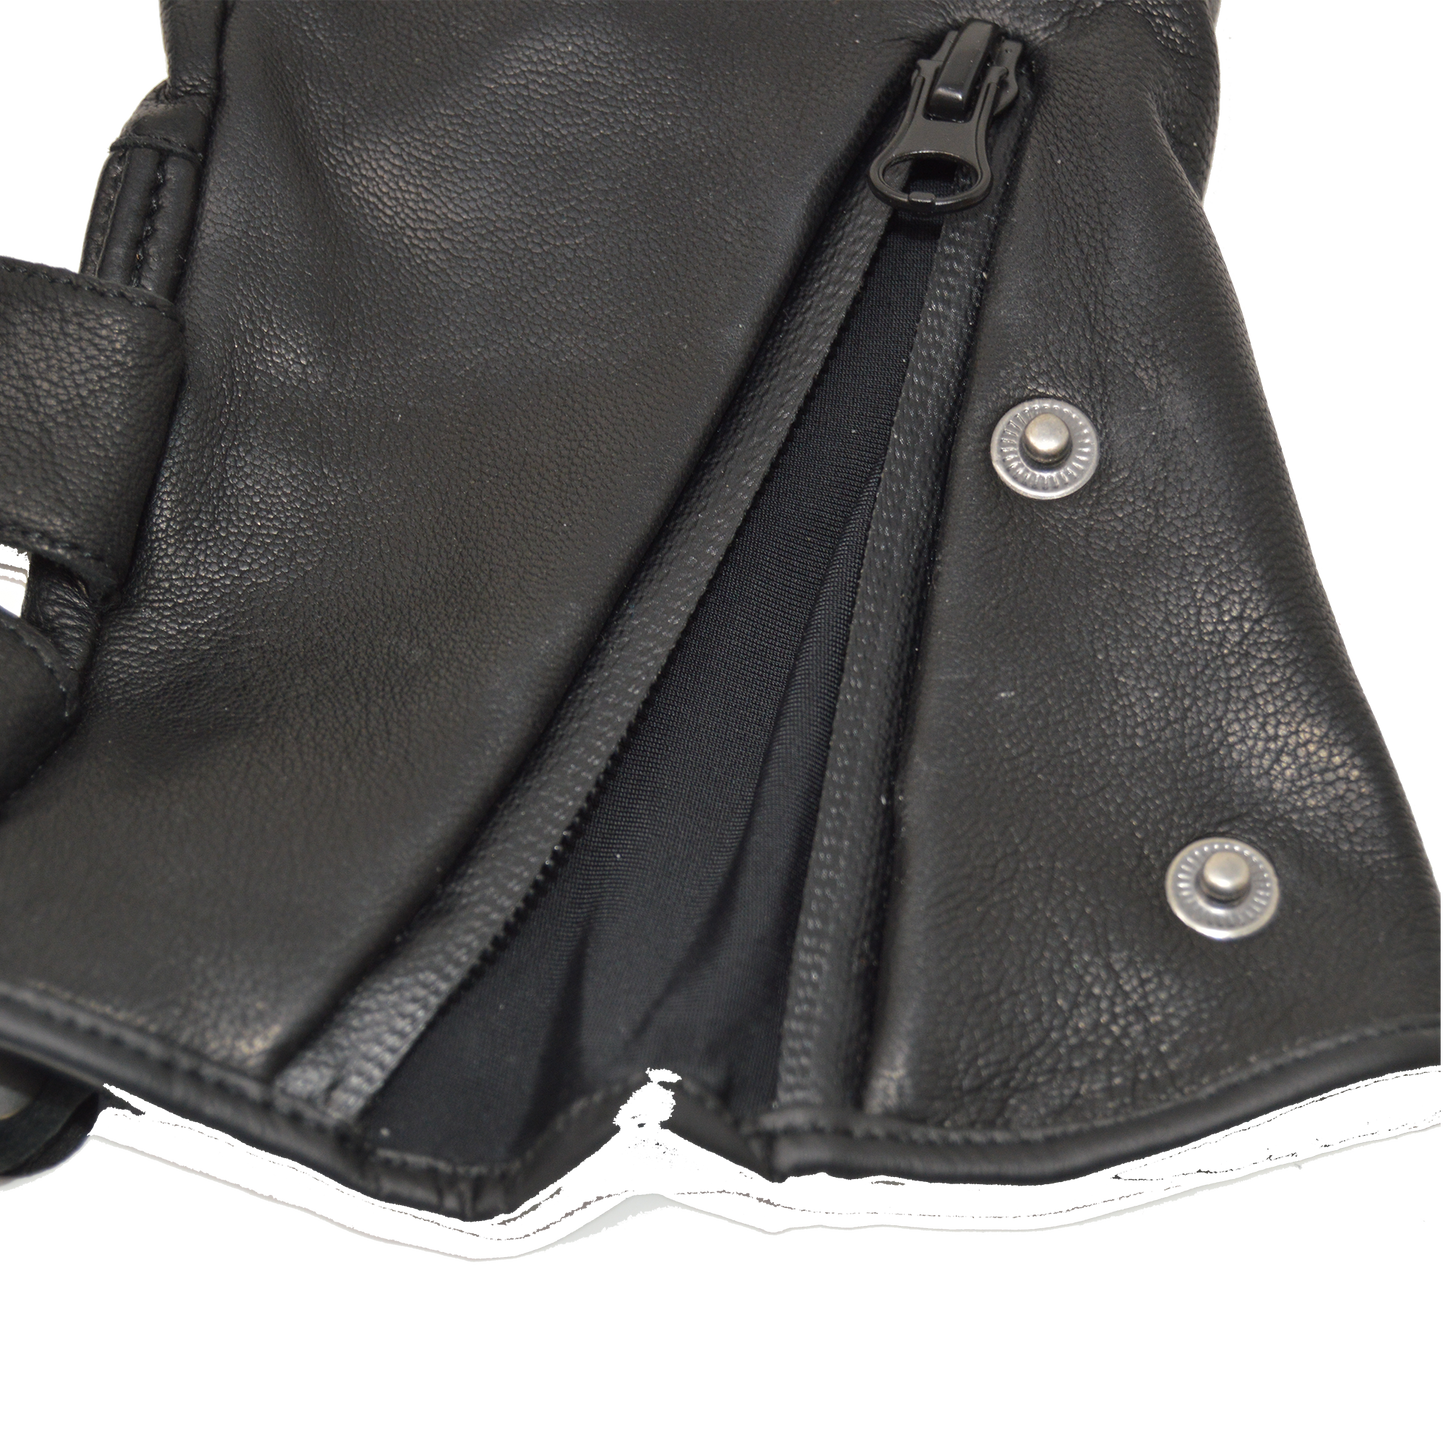 VL468 Vance Leather Premium Armored Gauntlet Glove